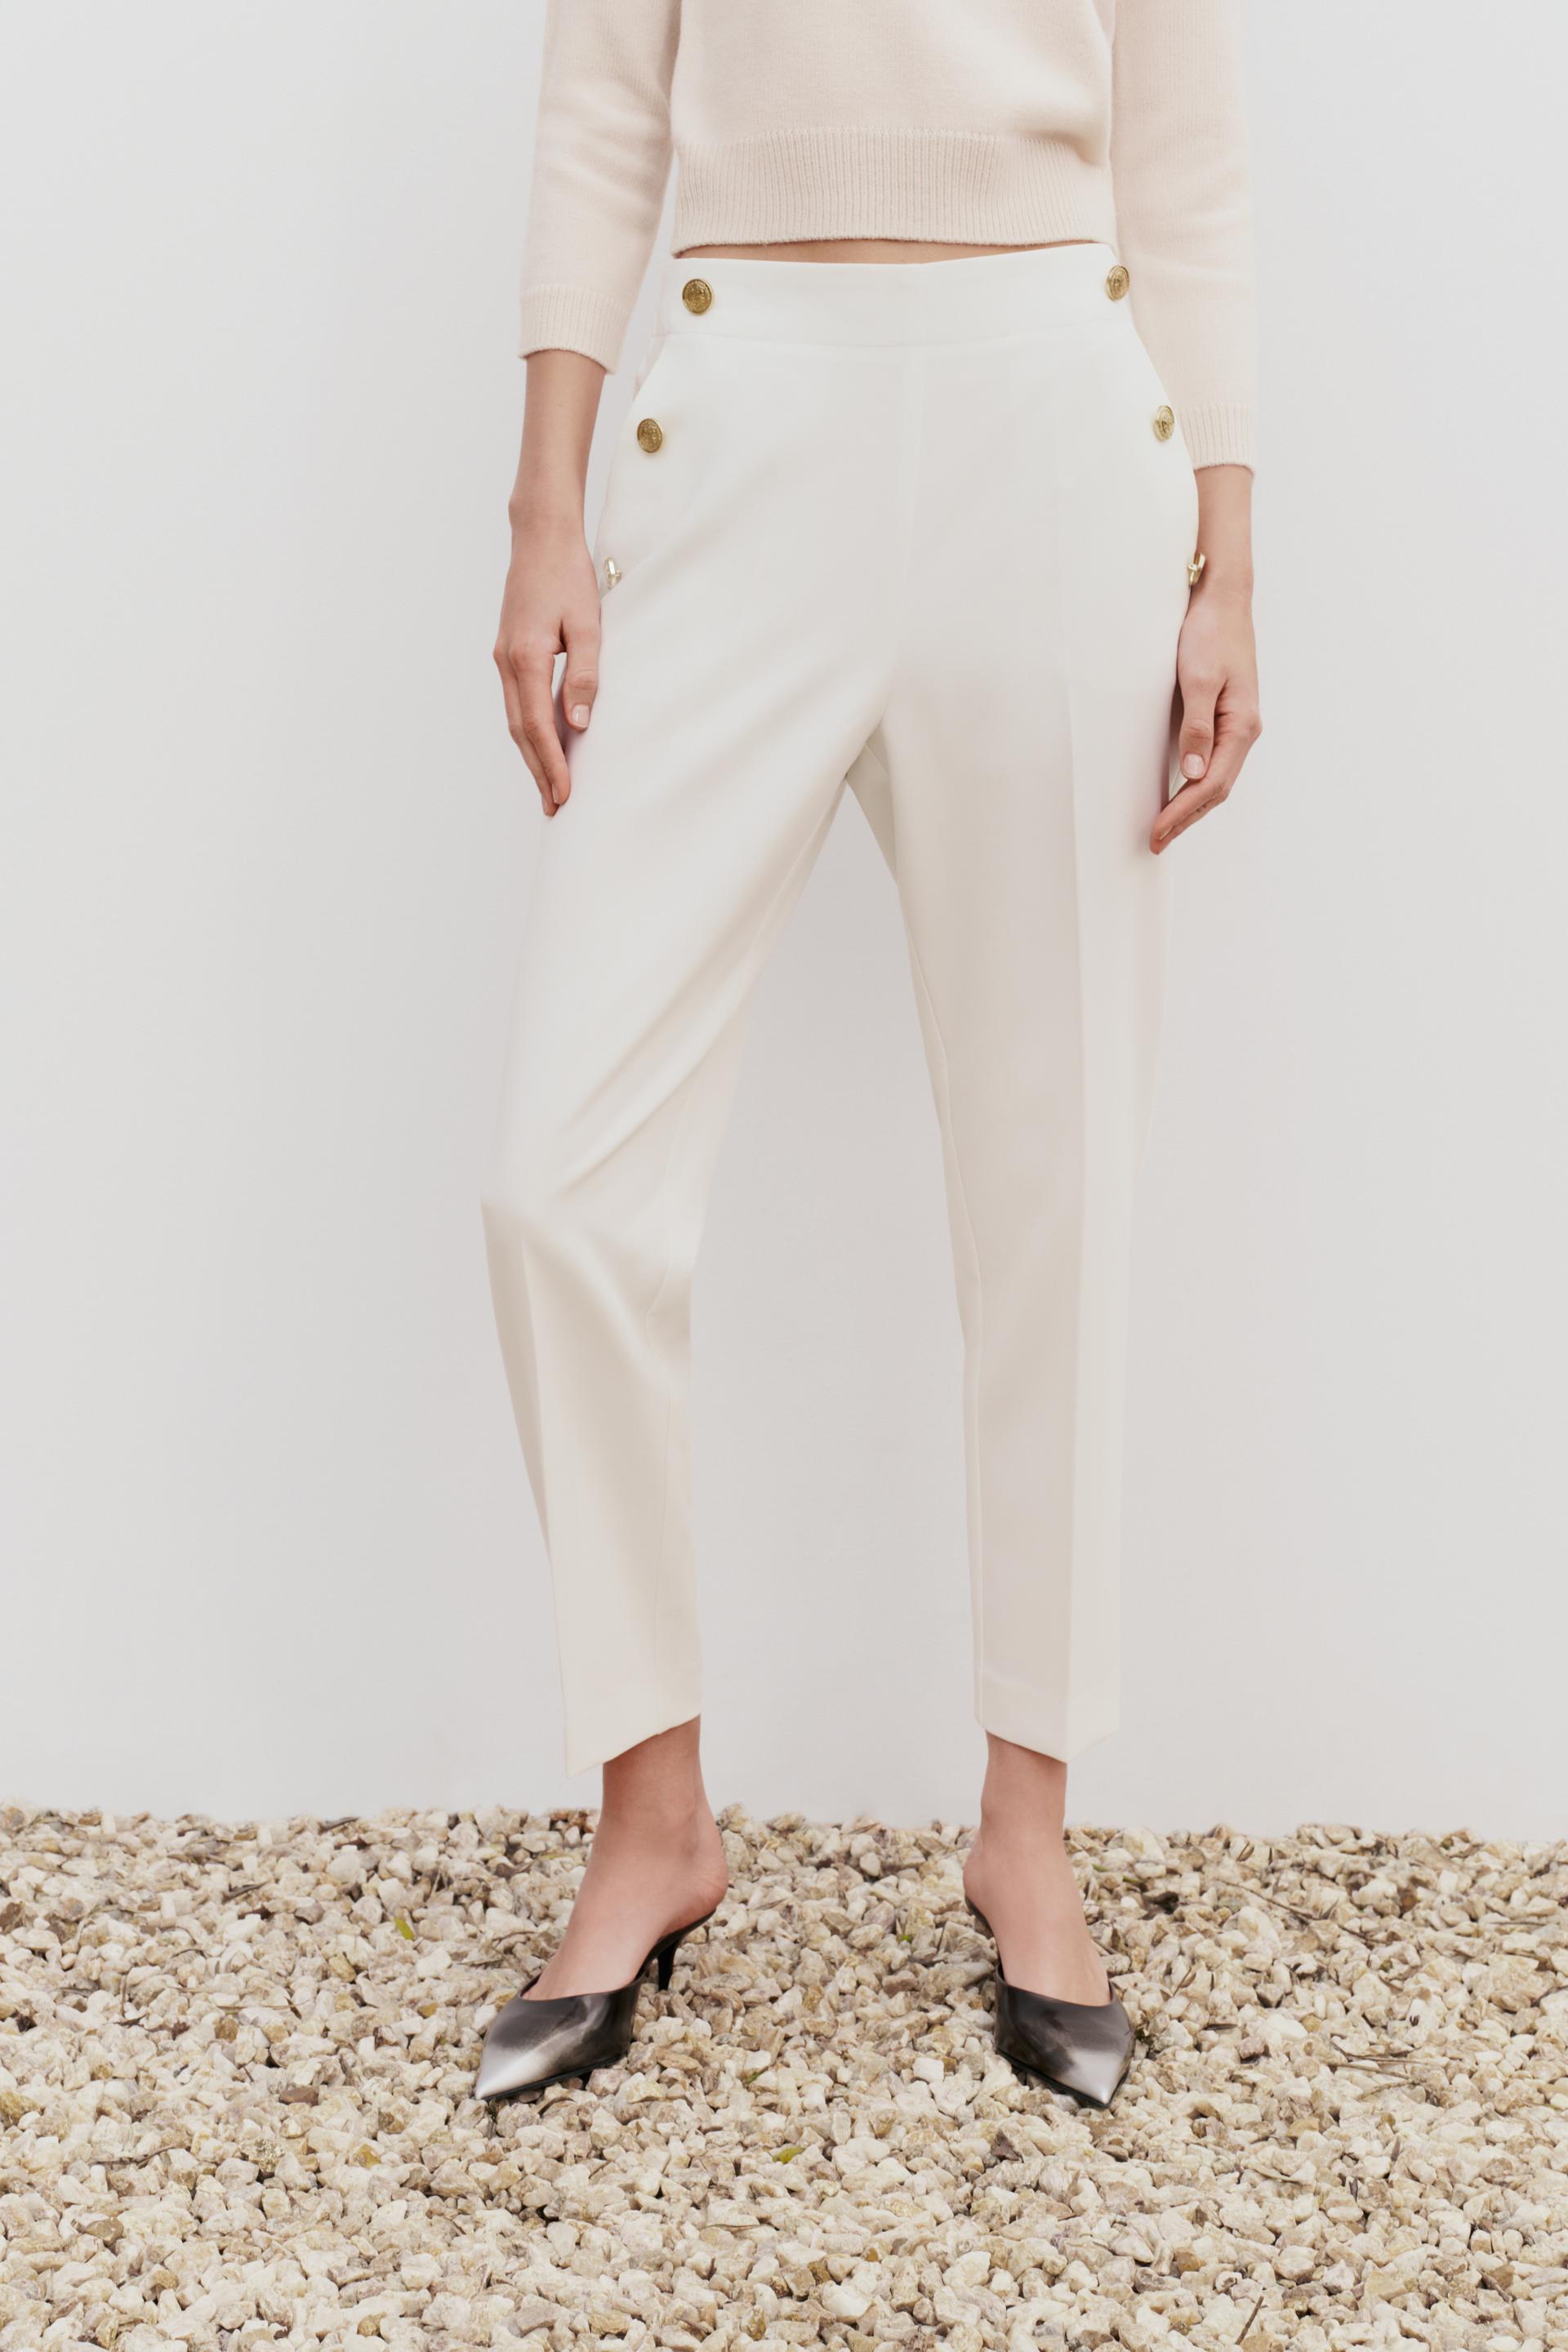 Zara Woman Pants Check XS Small Ruffles Straight Leg … - Gem